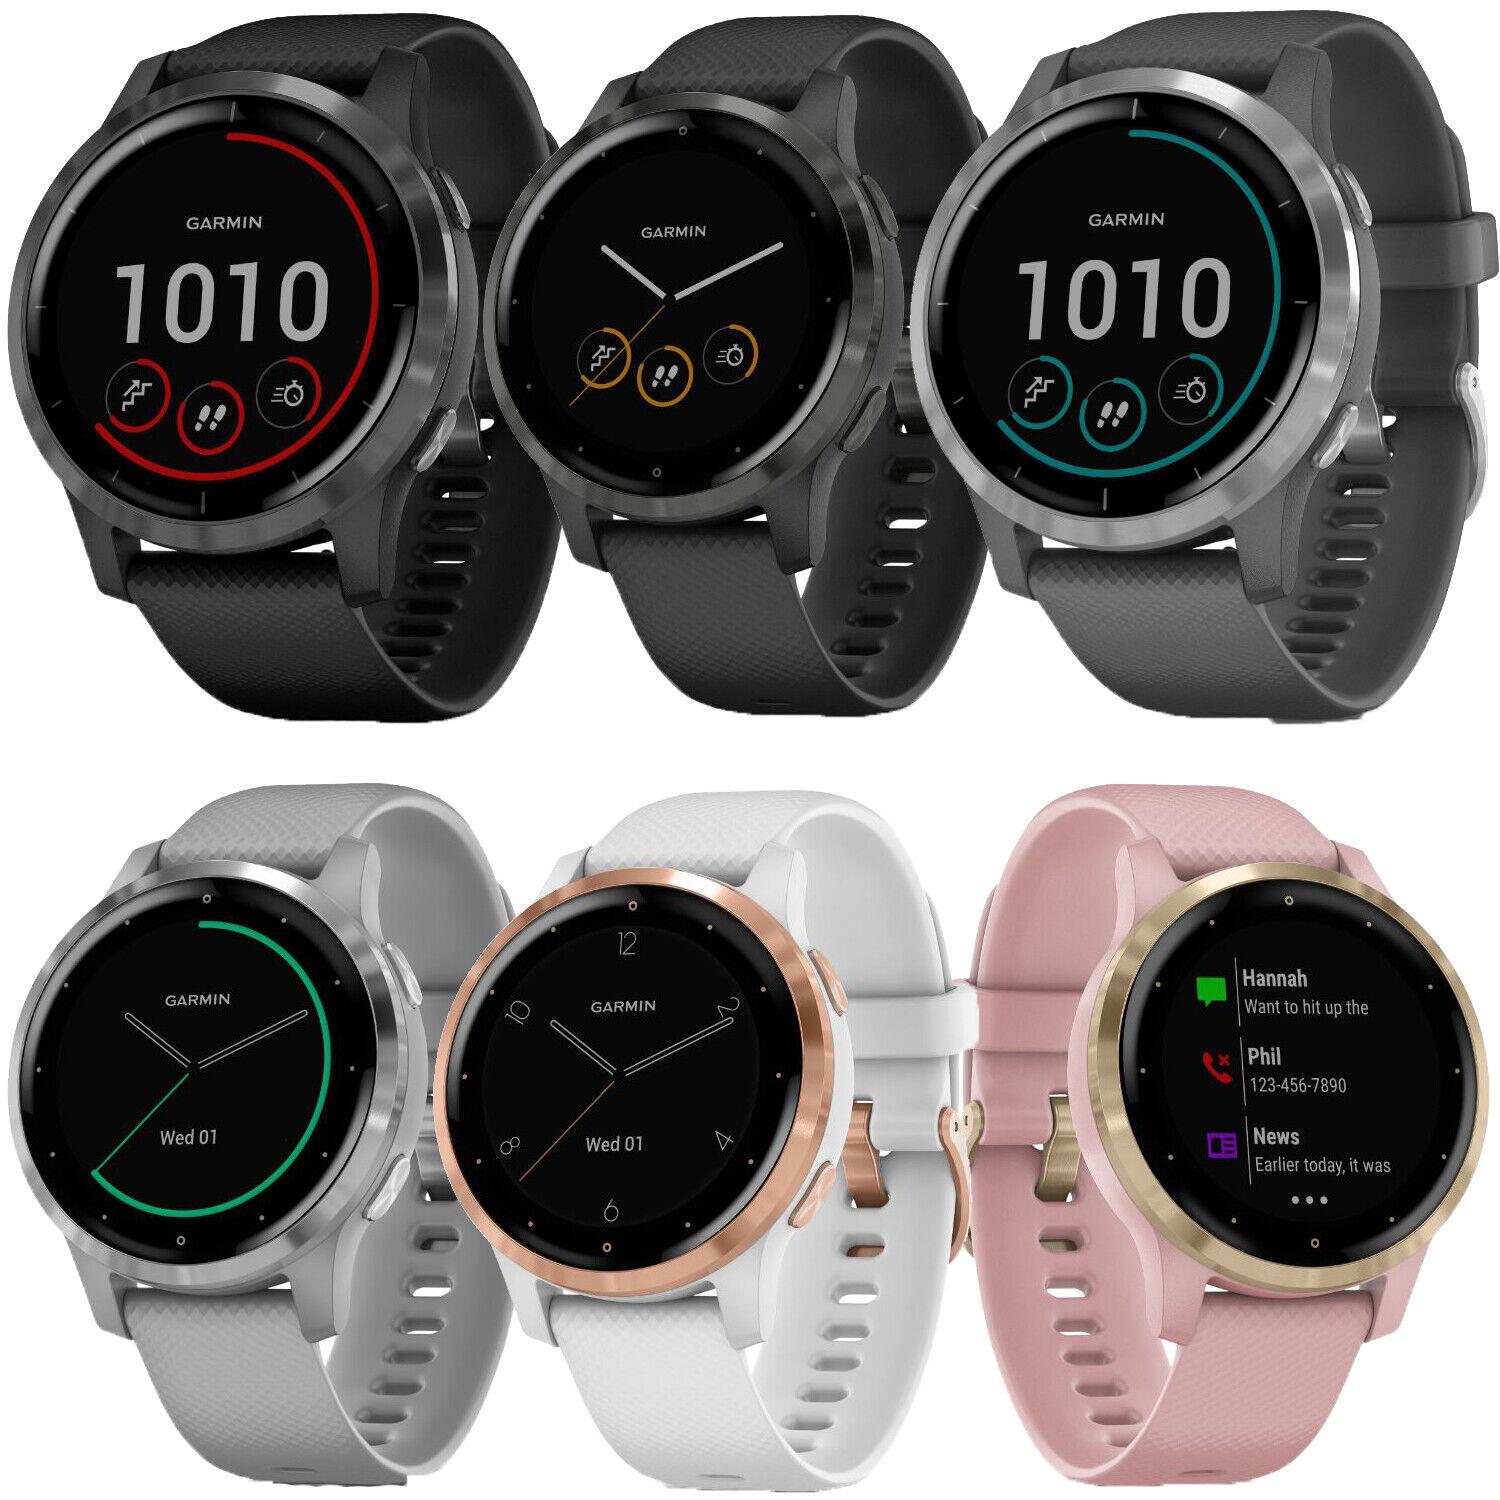 Garmin Vivoactive 4 4S Smartwatch Fitness Tracker for $166.99 Shipped